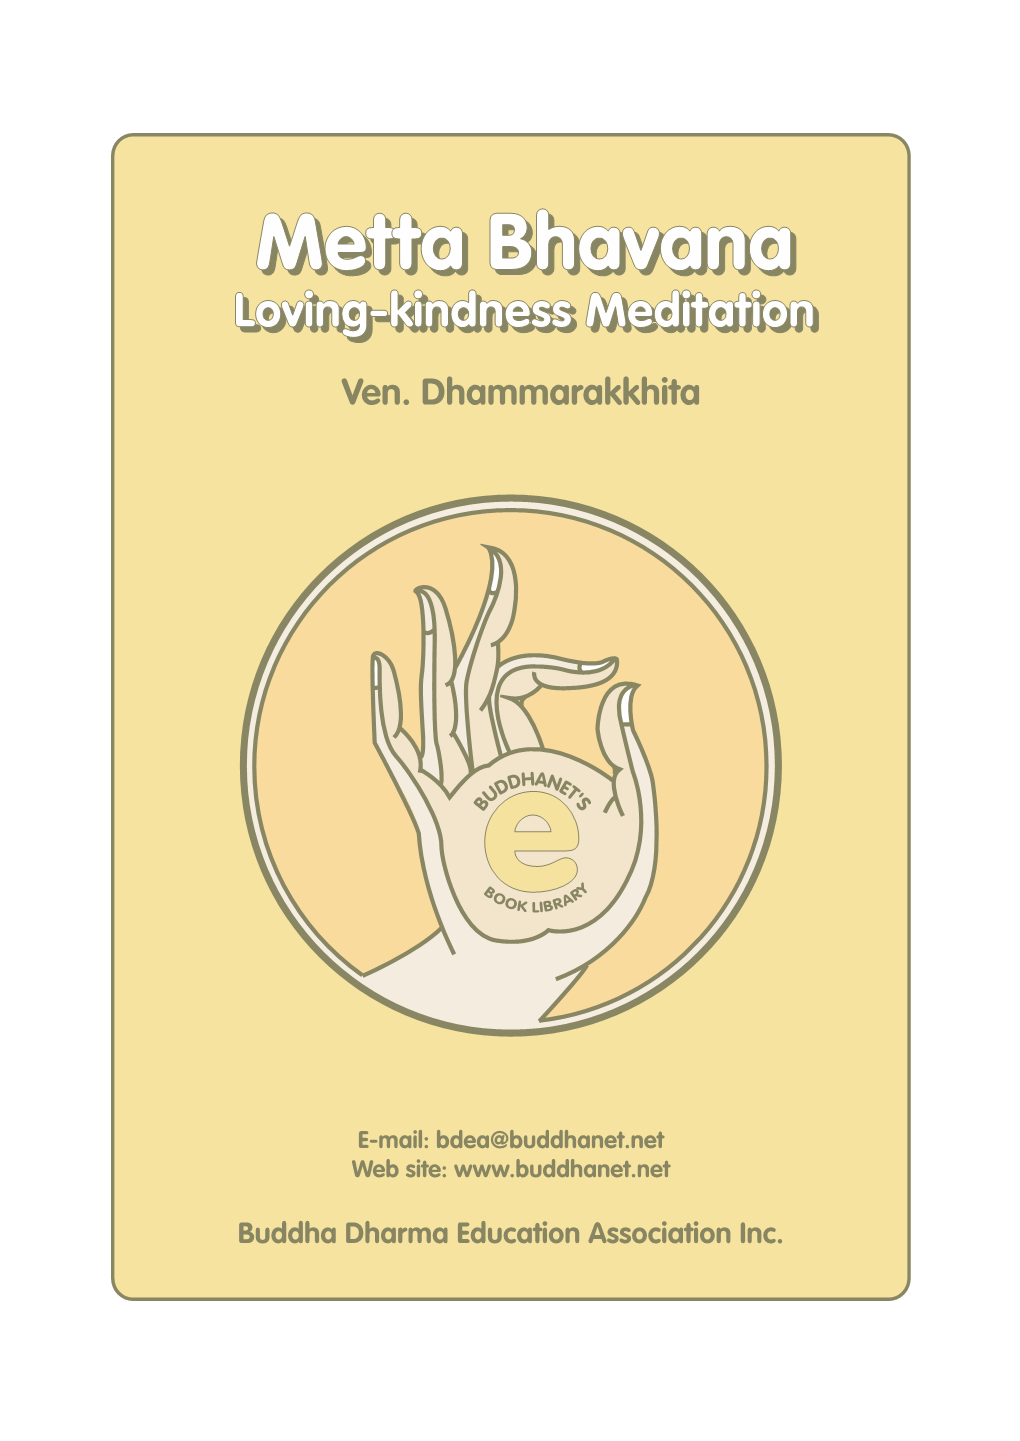 Metta Bhavanabhavana Loving-Kindnessloving-Kindness Meditationmeditation Ven